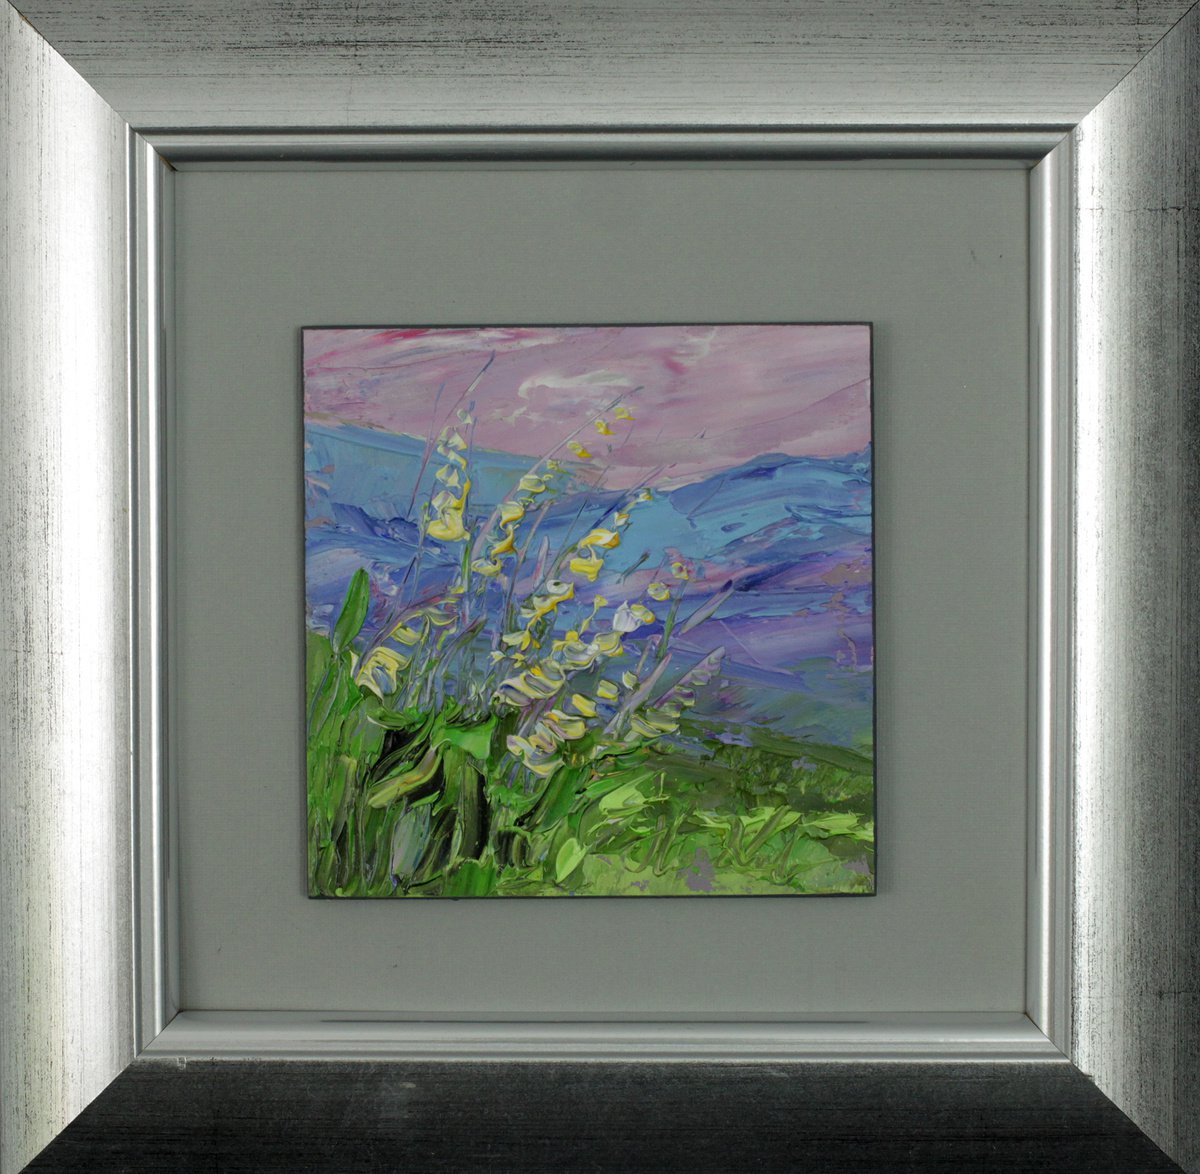 Landscape with grasses by Margaret Raven